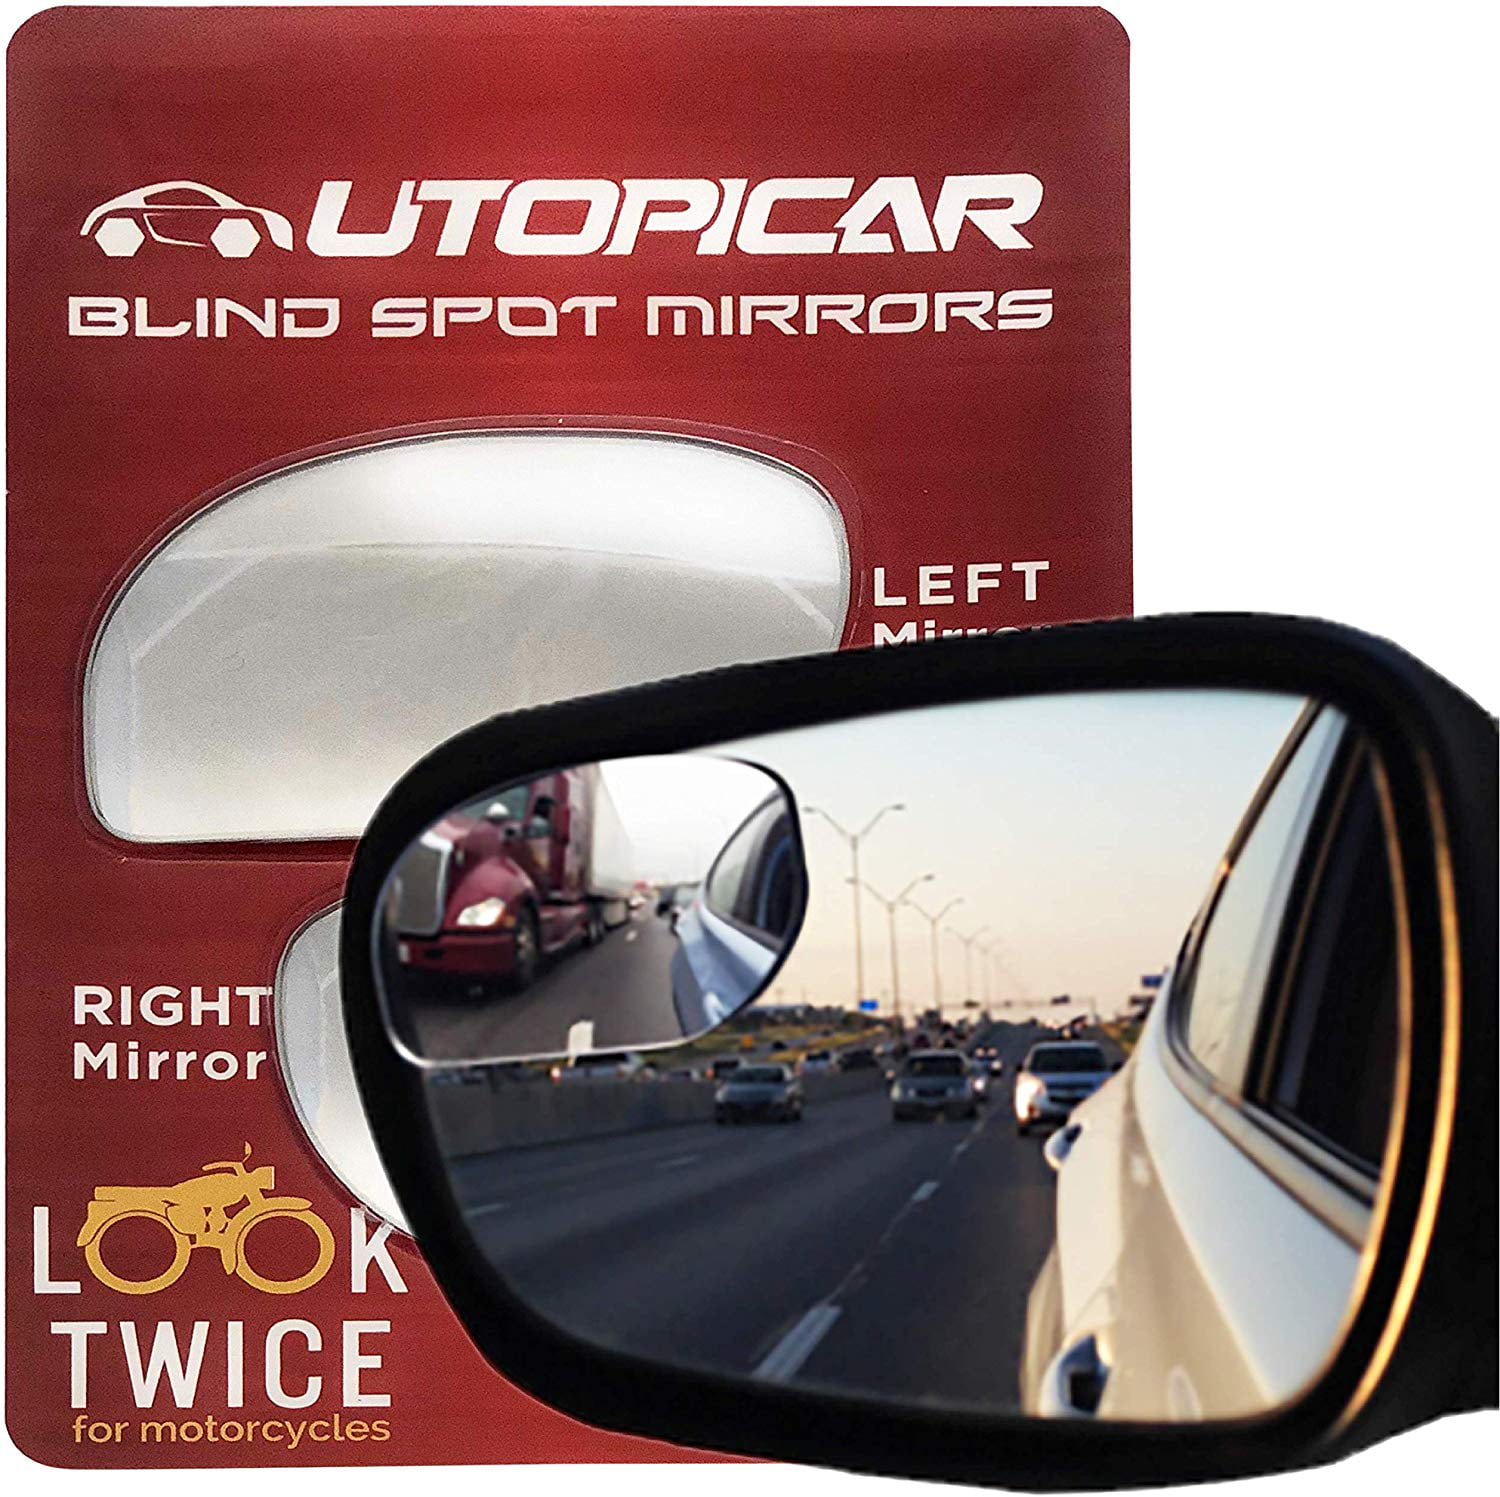 Utopicar Blind Spot Mirrors Unique, Should I Use Blind Spot Mirrors